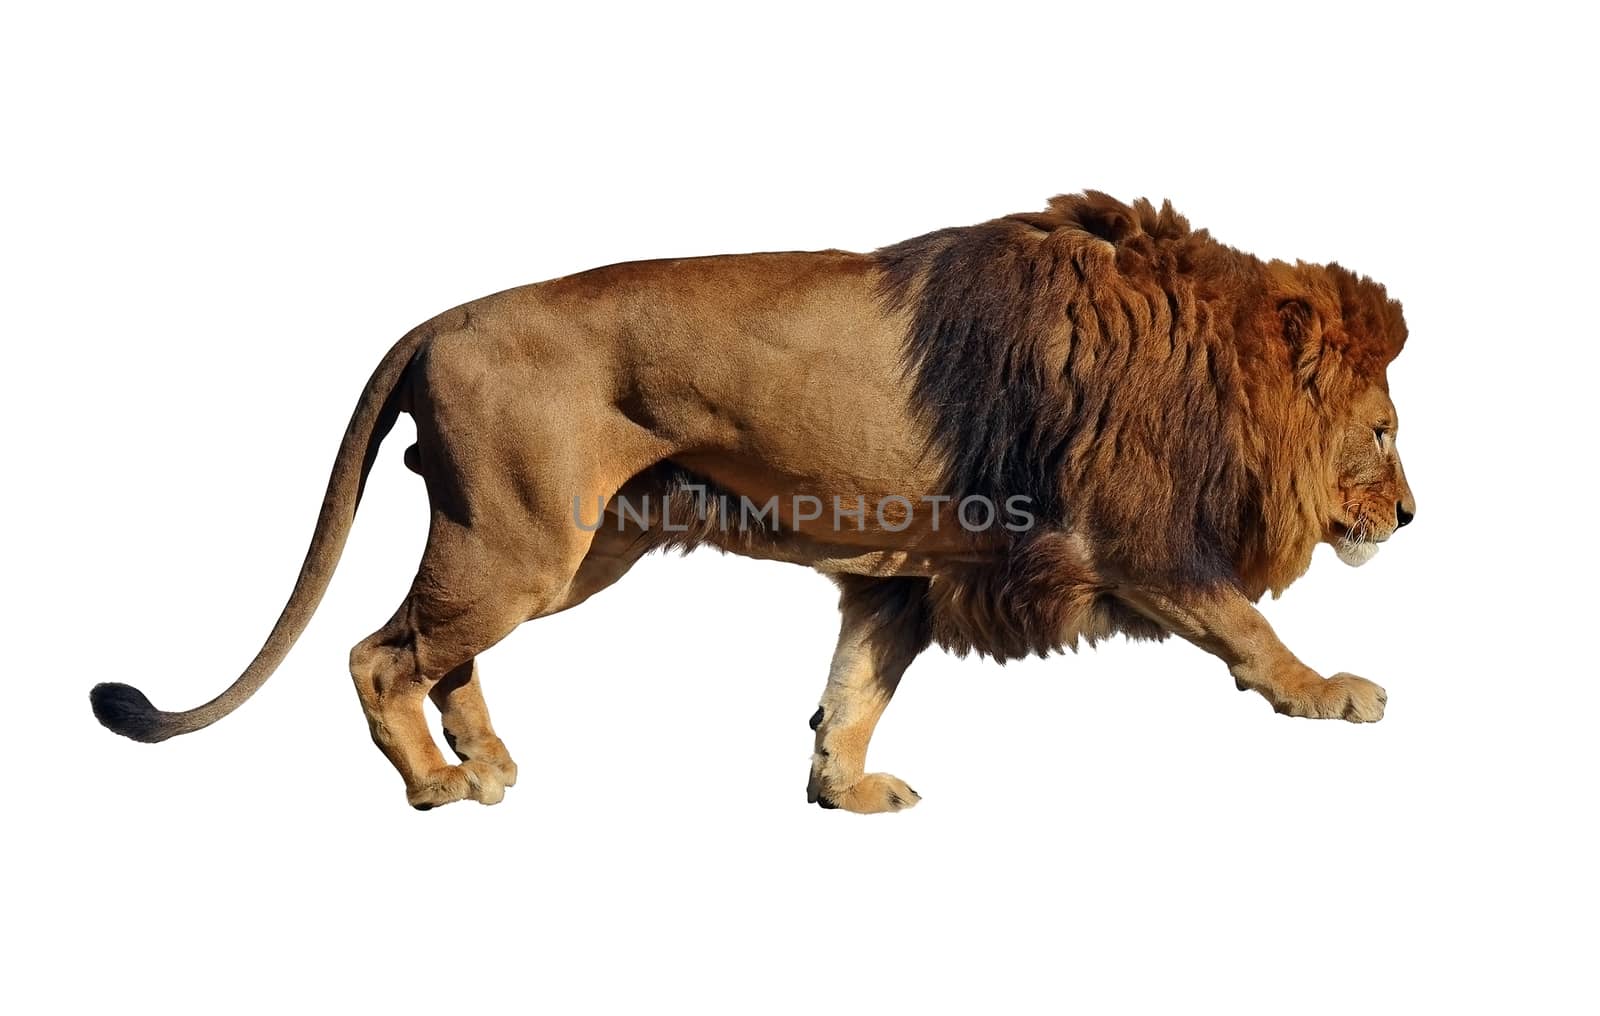 Isolated on white background lion body profile